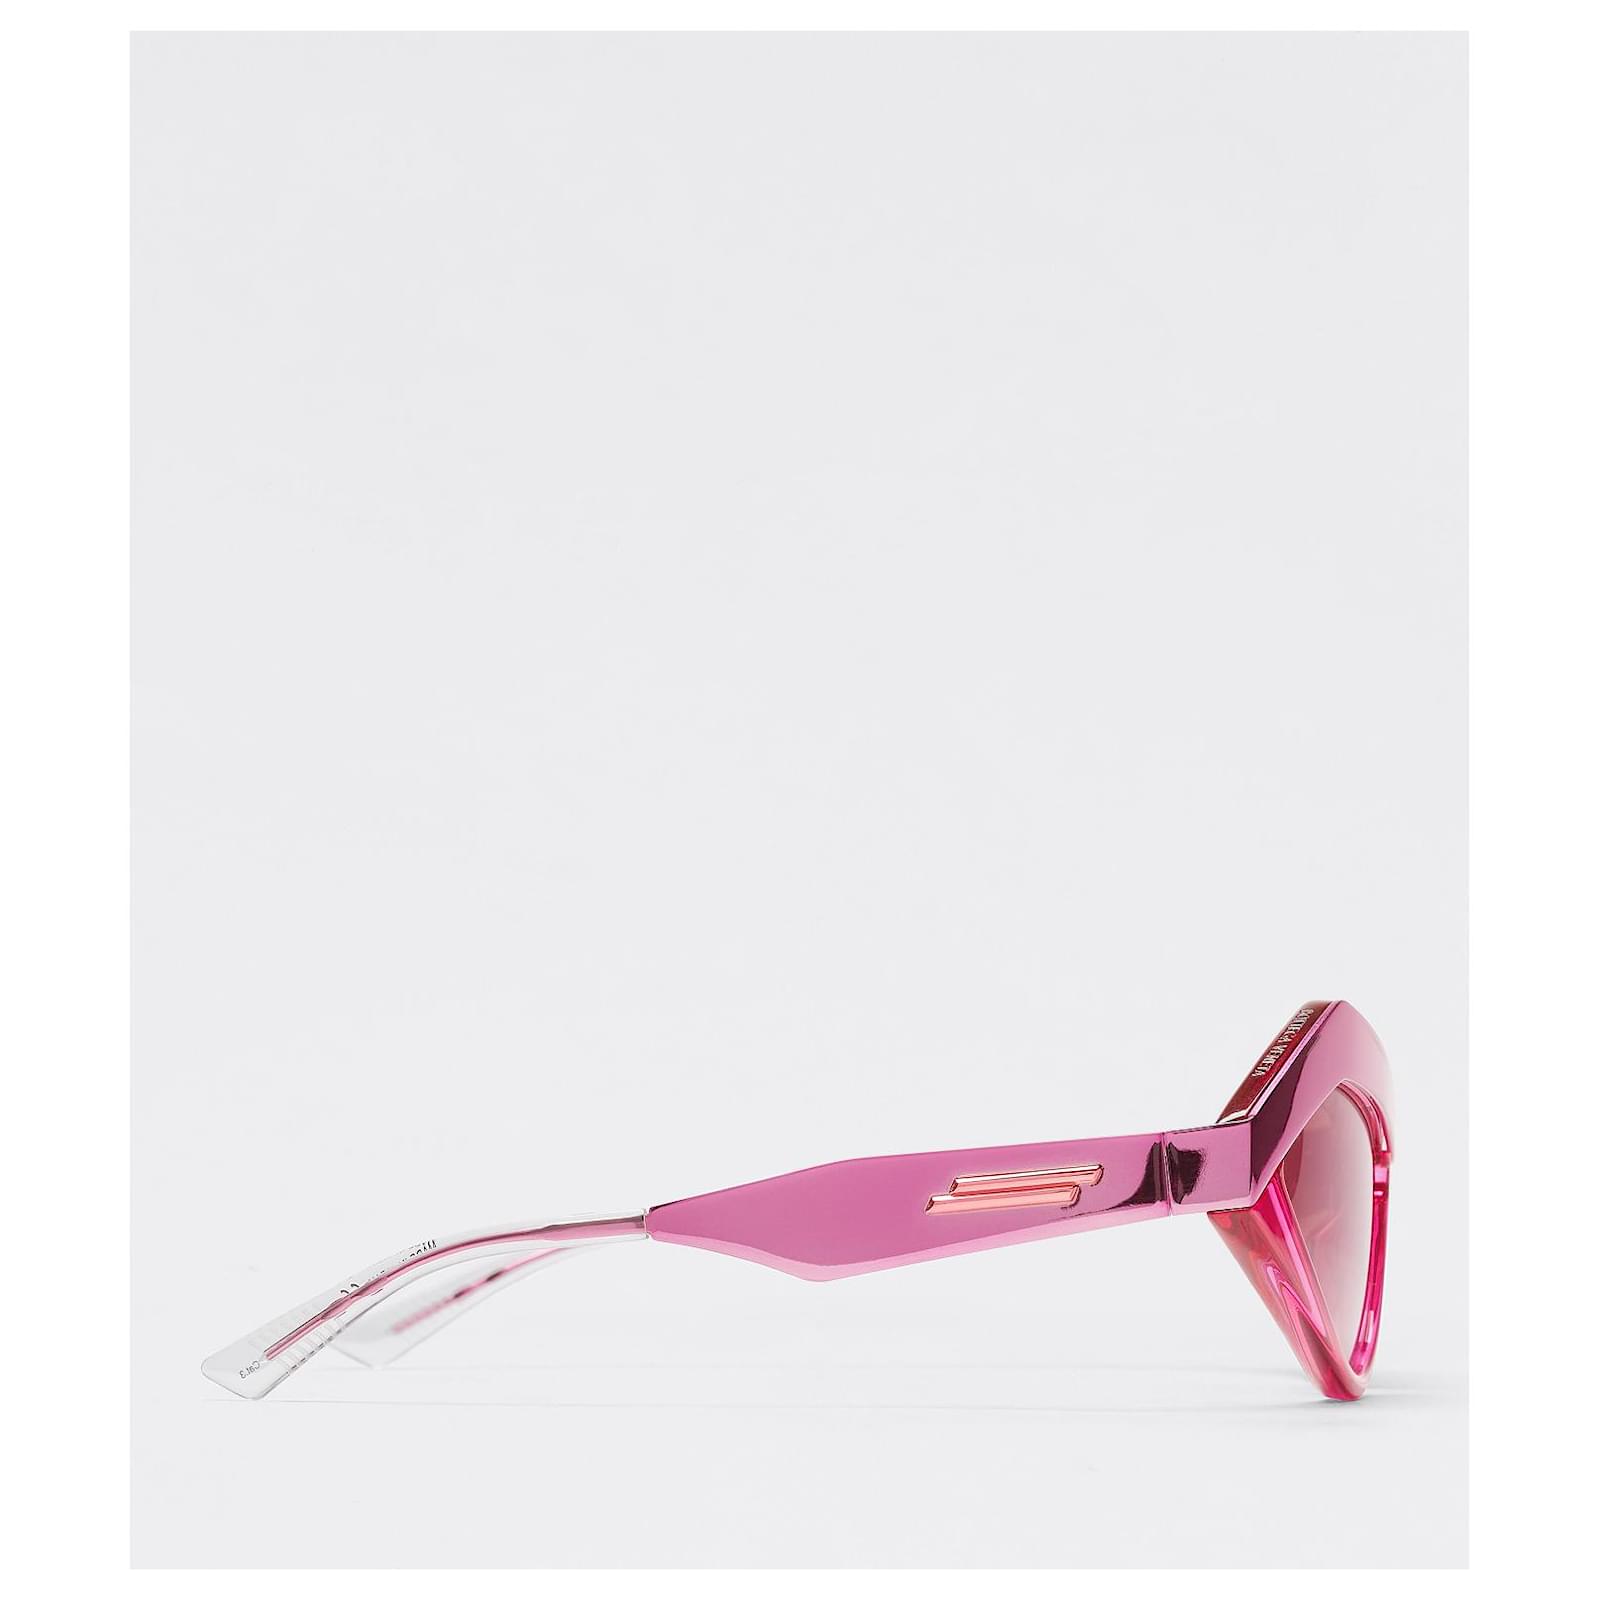 Bottega Veneta - Metal Cat-Eye Sunglasses - Pink - Sunglasses